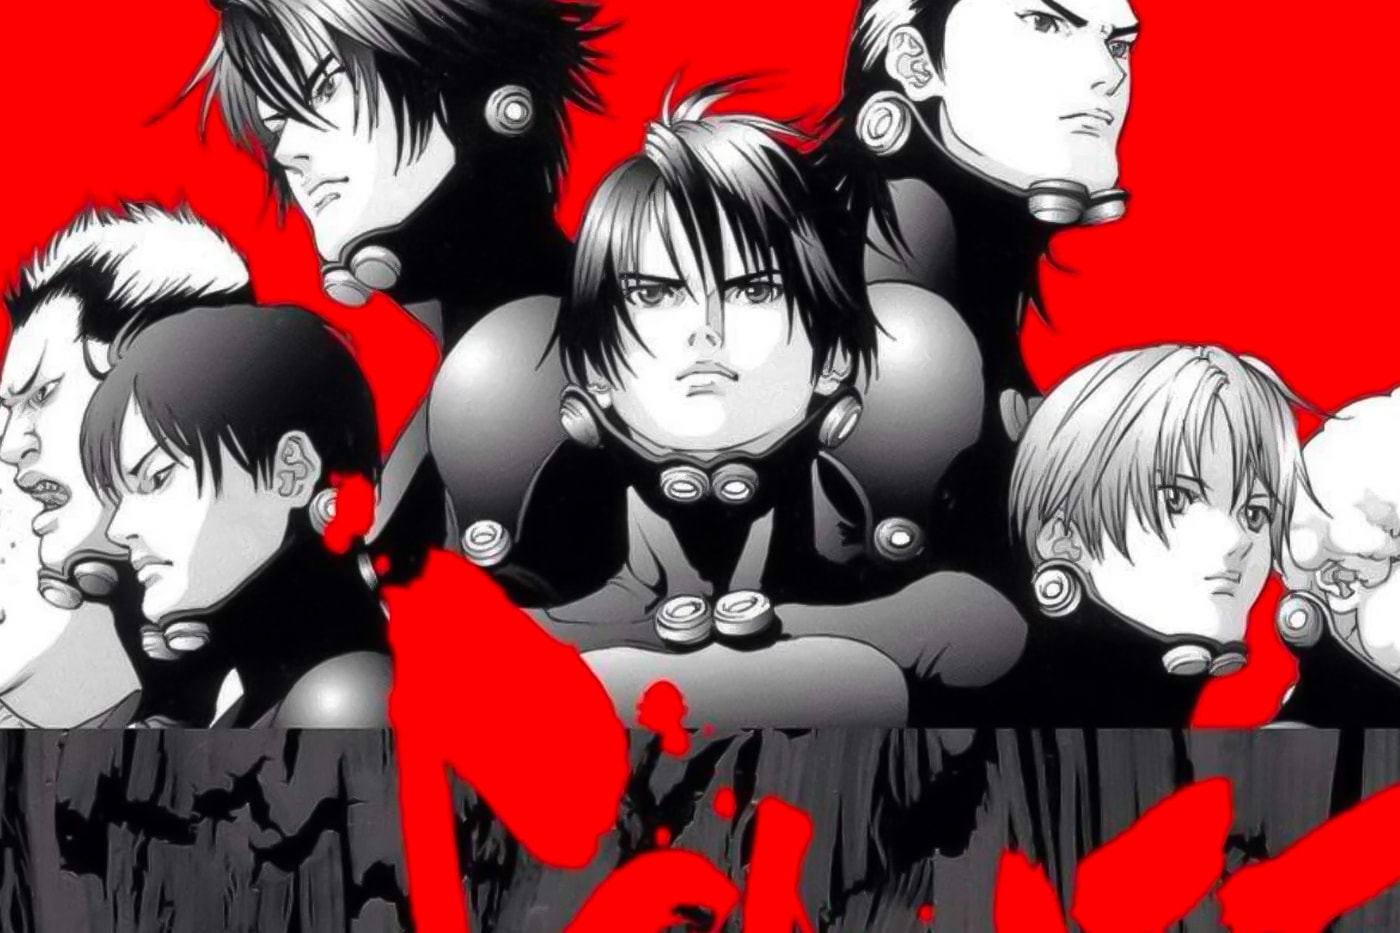 Gantz Hollywood Live-Action Adaptation Announcement Info Manga Anime Hiroya Oku Shueisha Weekly Shōnen Jump Julius Avery